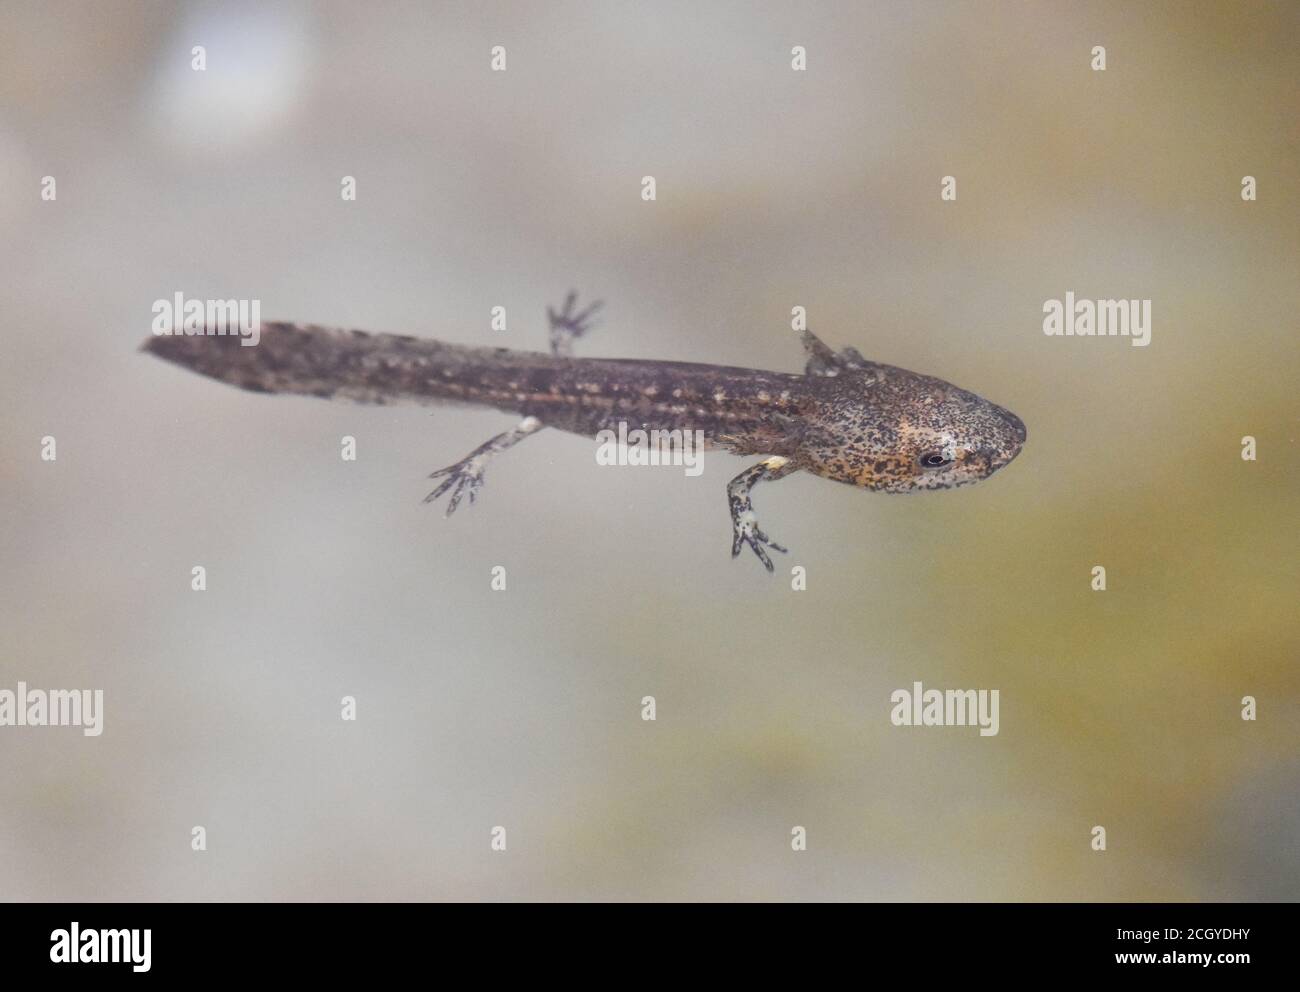 Larva de salamandro mostrando las branquias externas Foto de stock